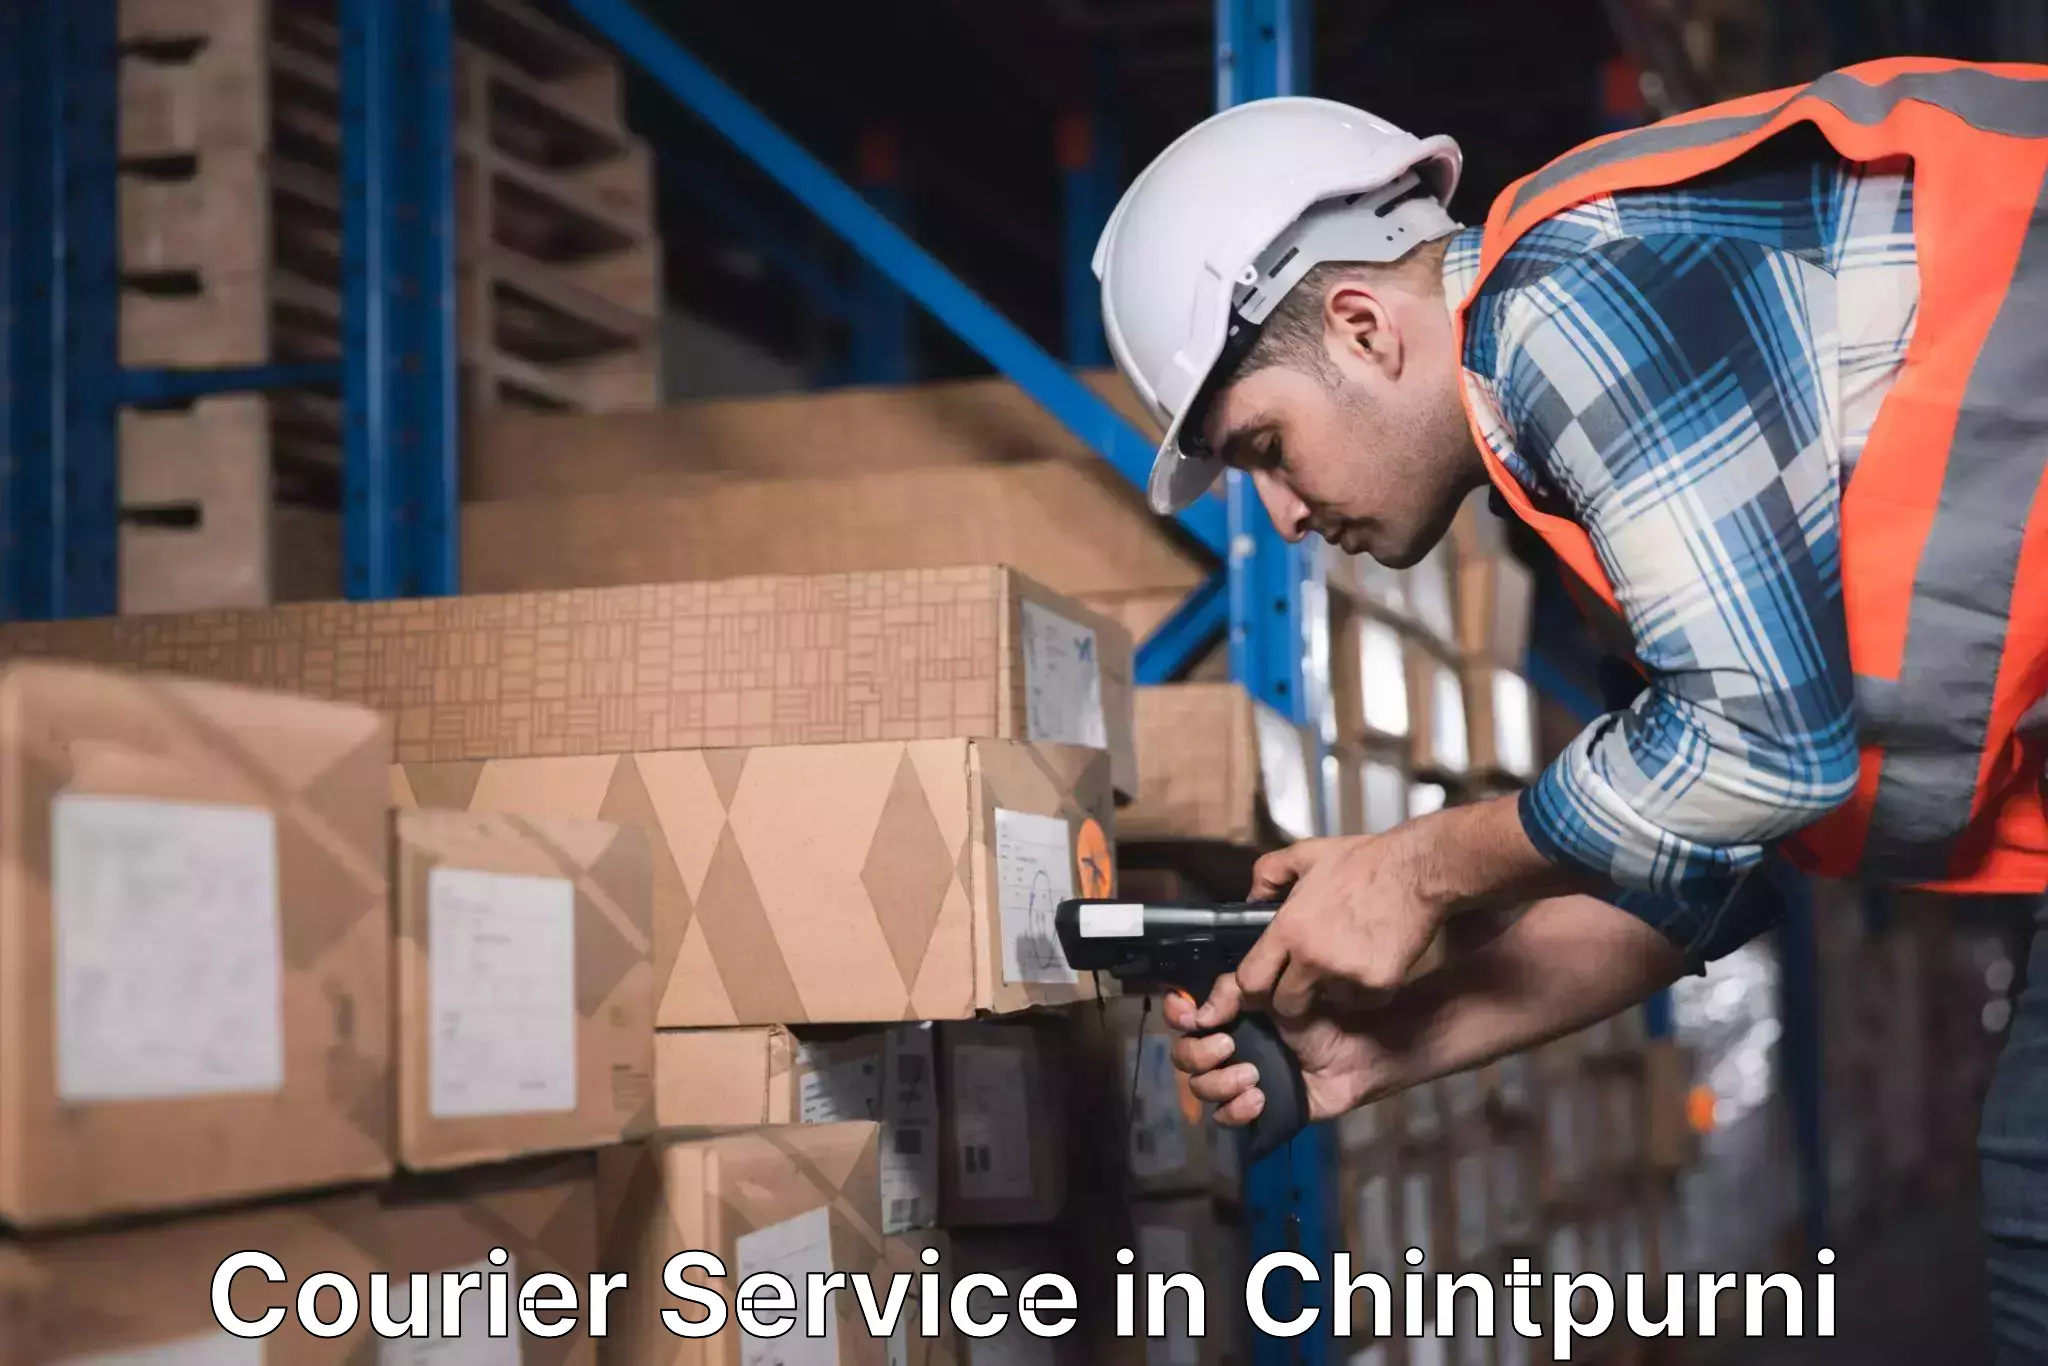 Supply chain efficiency in Chintpurni